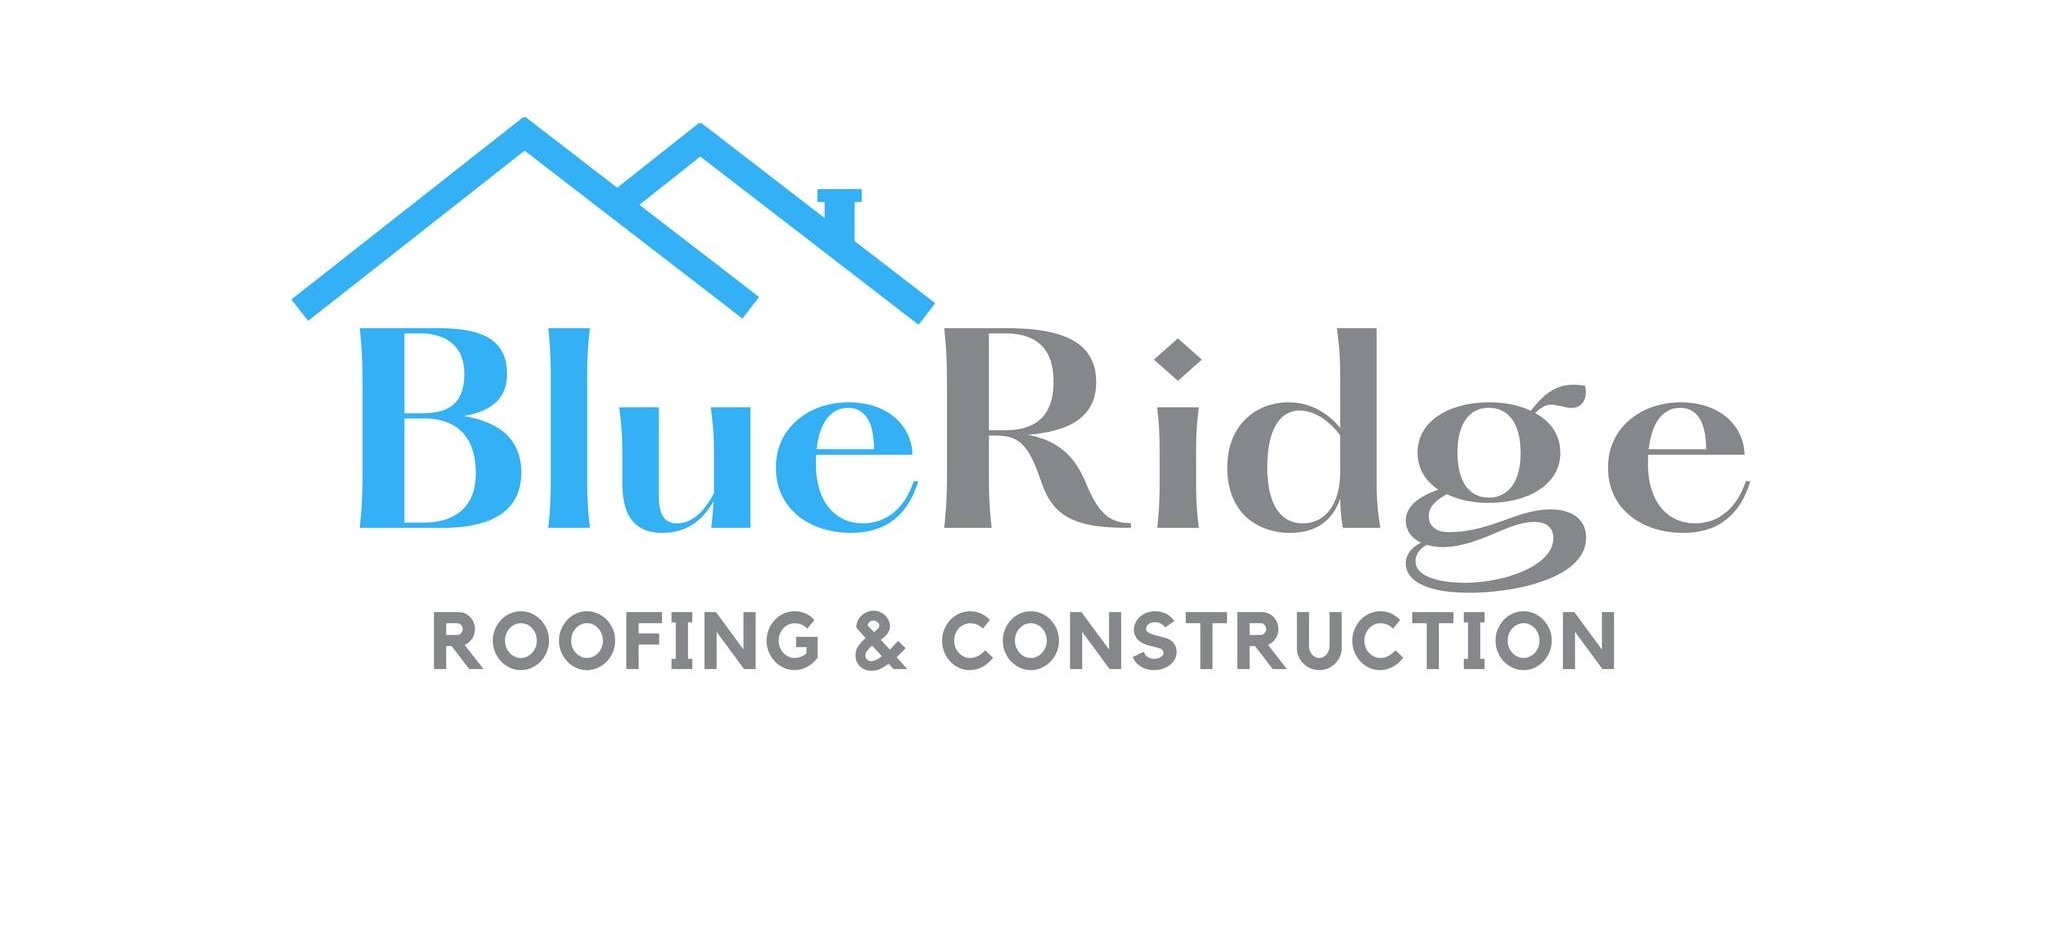 BlueRidge Roofing & Construction